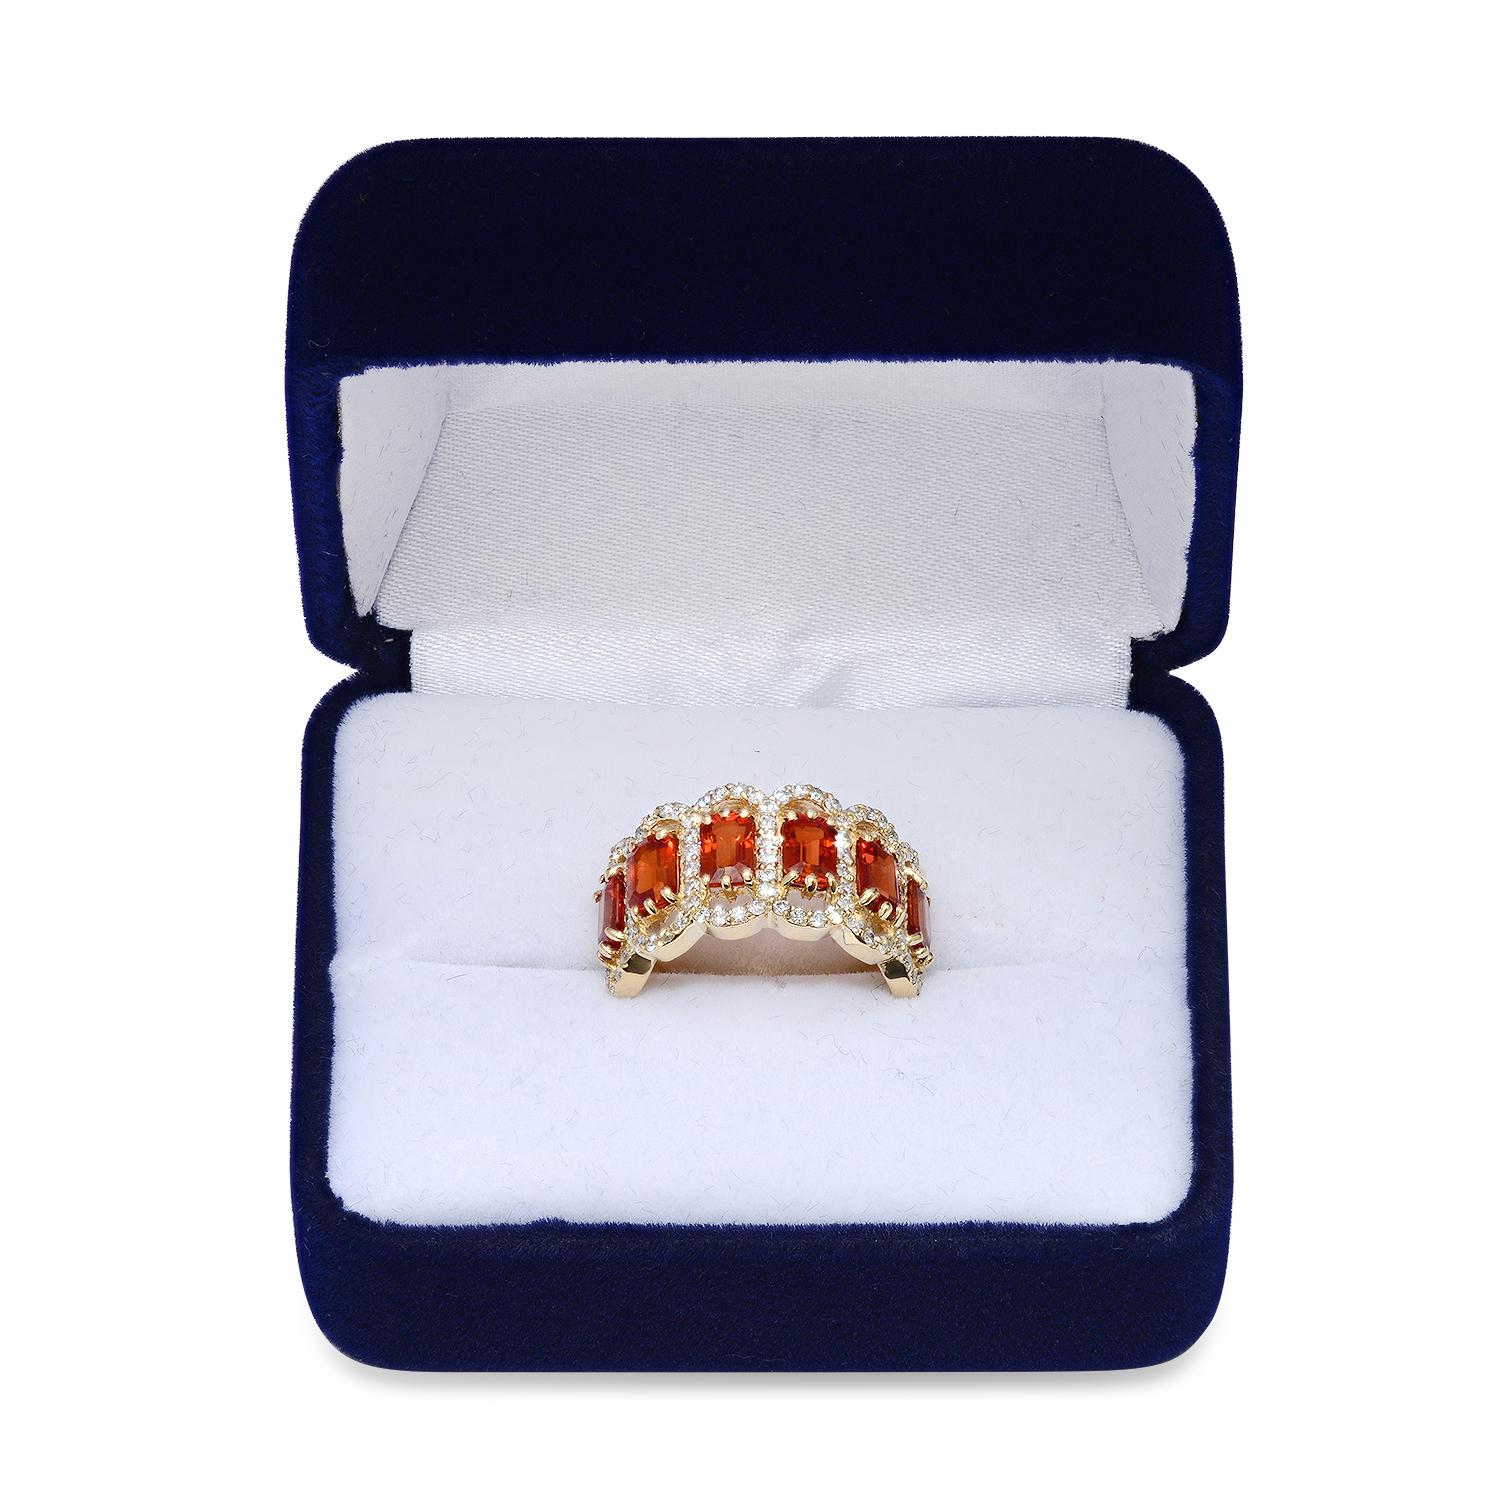 14K Yellow Gold with 4.13ct Orange Sapphire and 1.06ct Diamond Ring